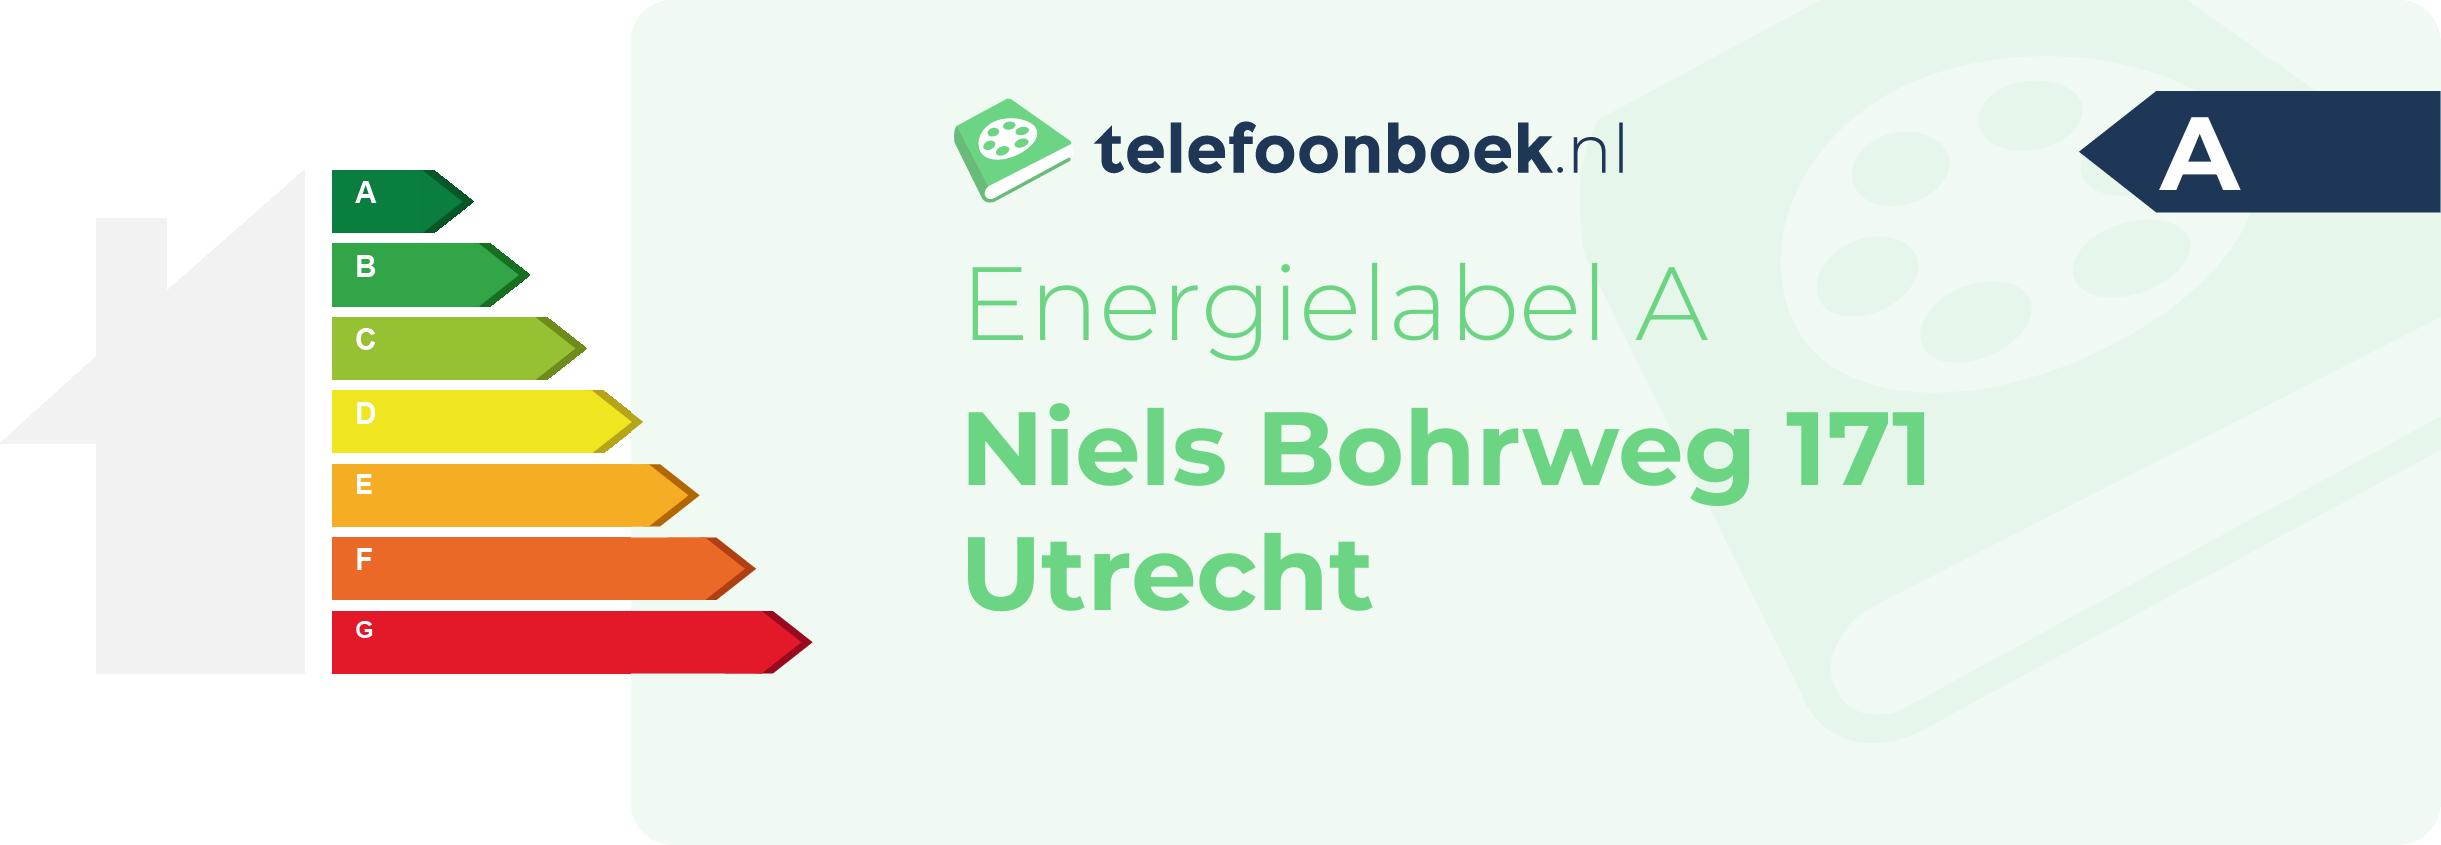 Energielabel Niels Bohrweg 171 Utrecht